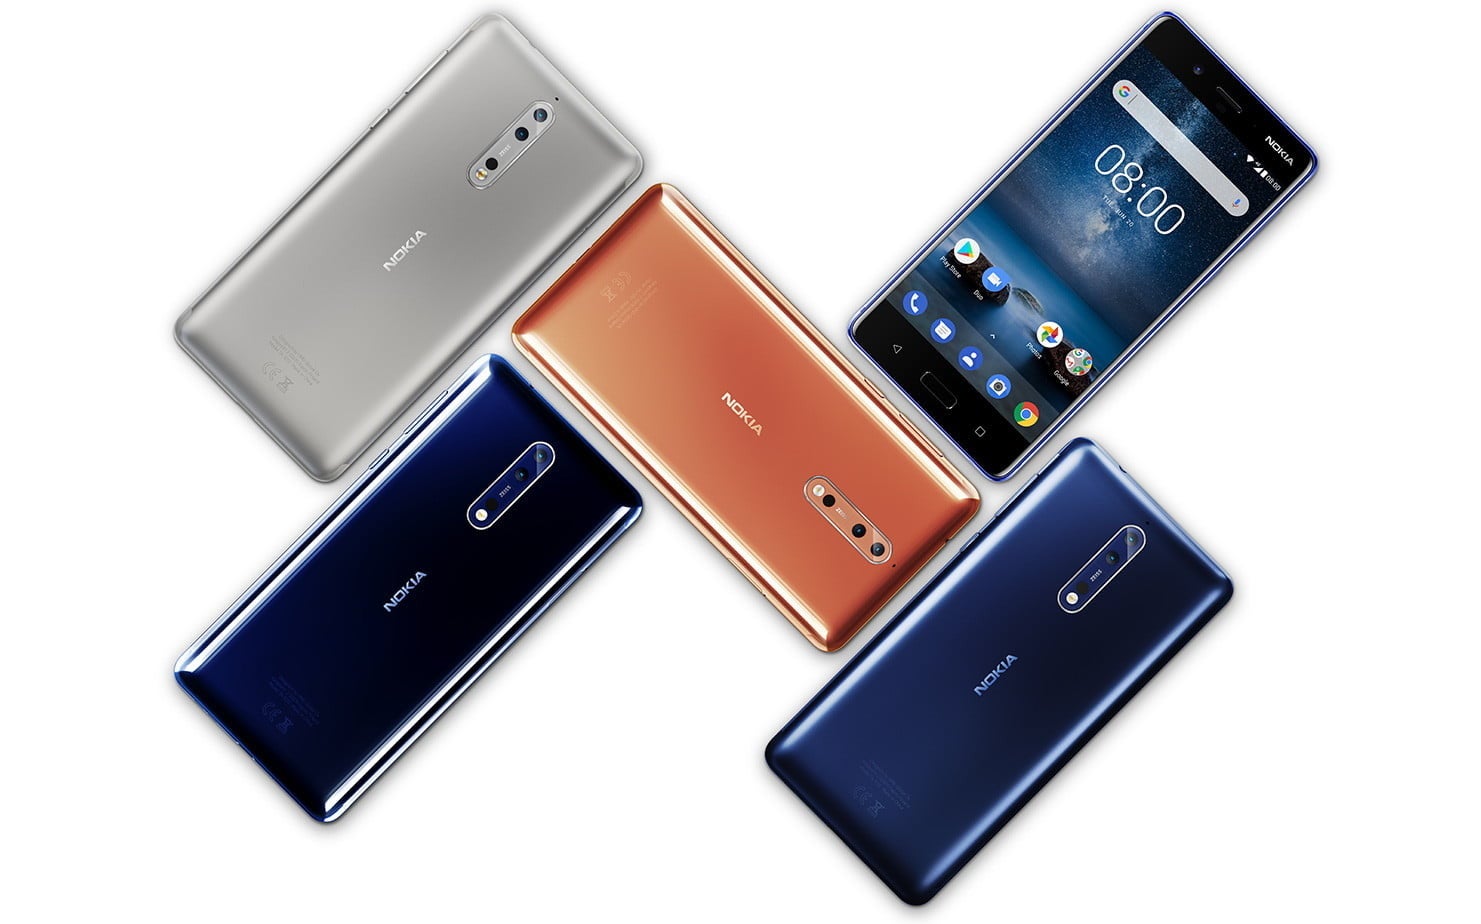 Camera app update reveals names of some unannounced Nokia smartphones